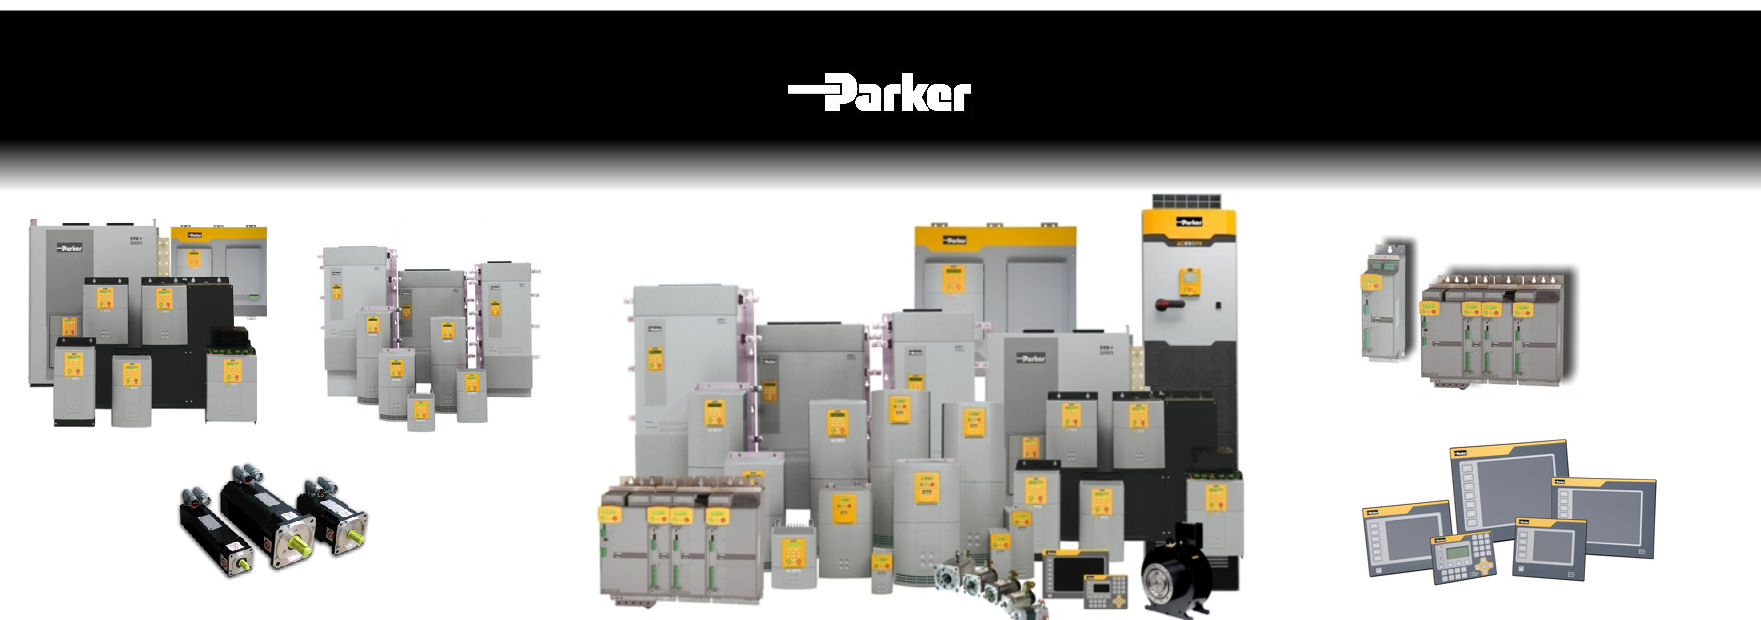 Parker SSD Drives Division